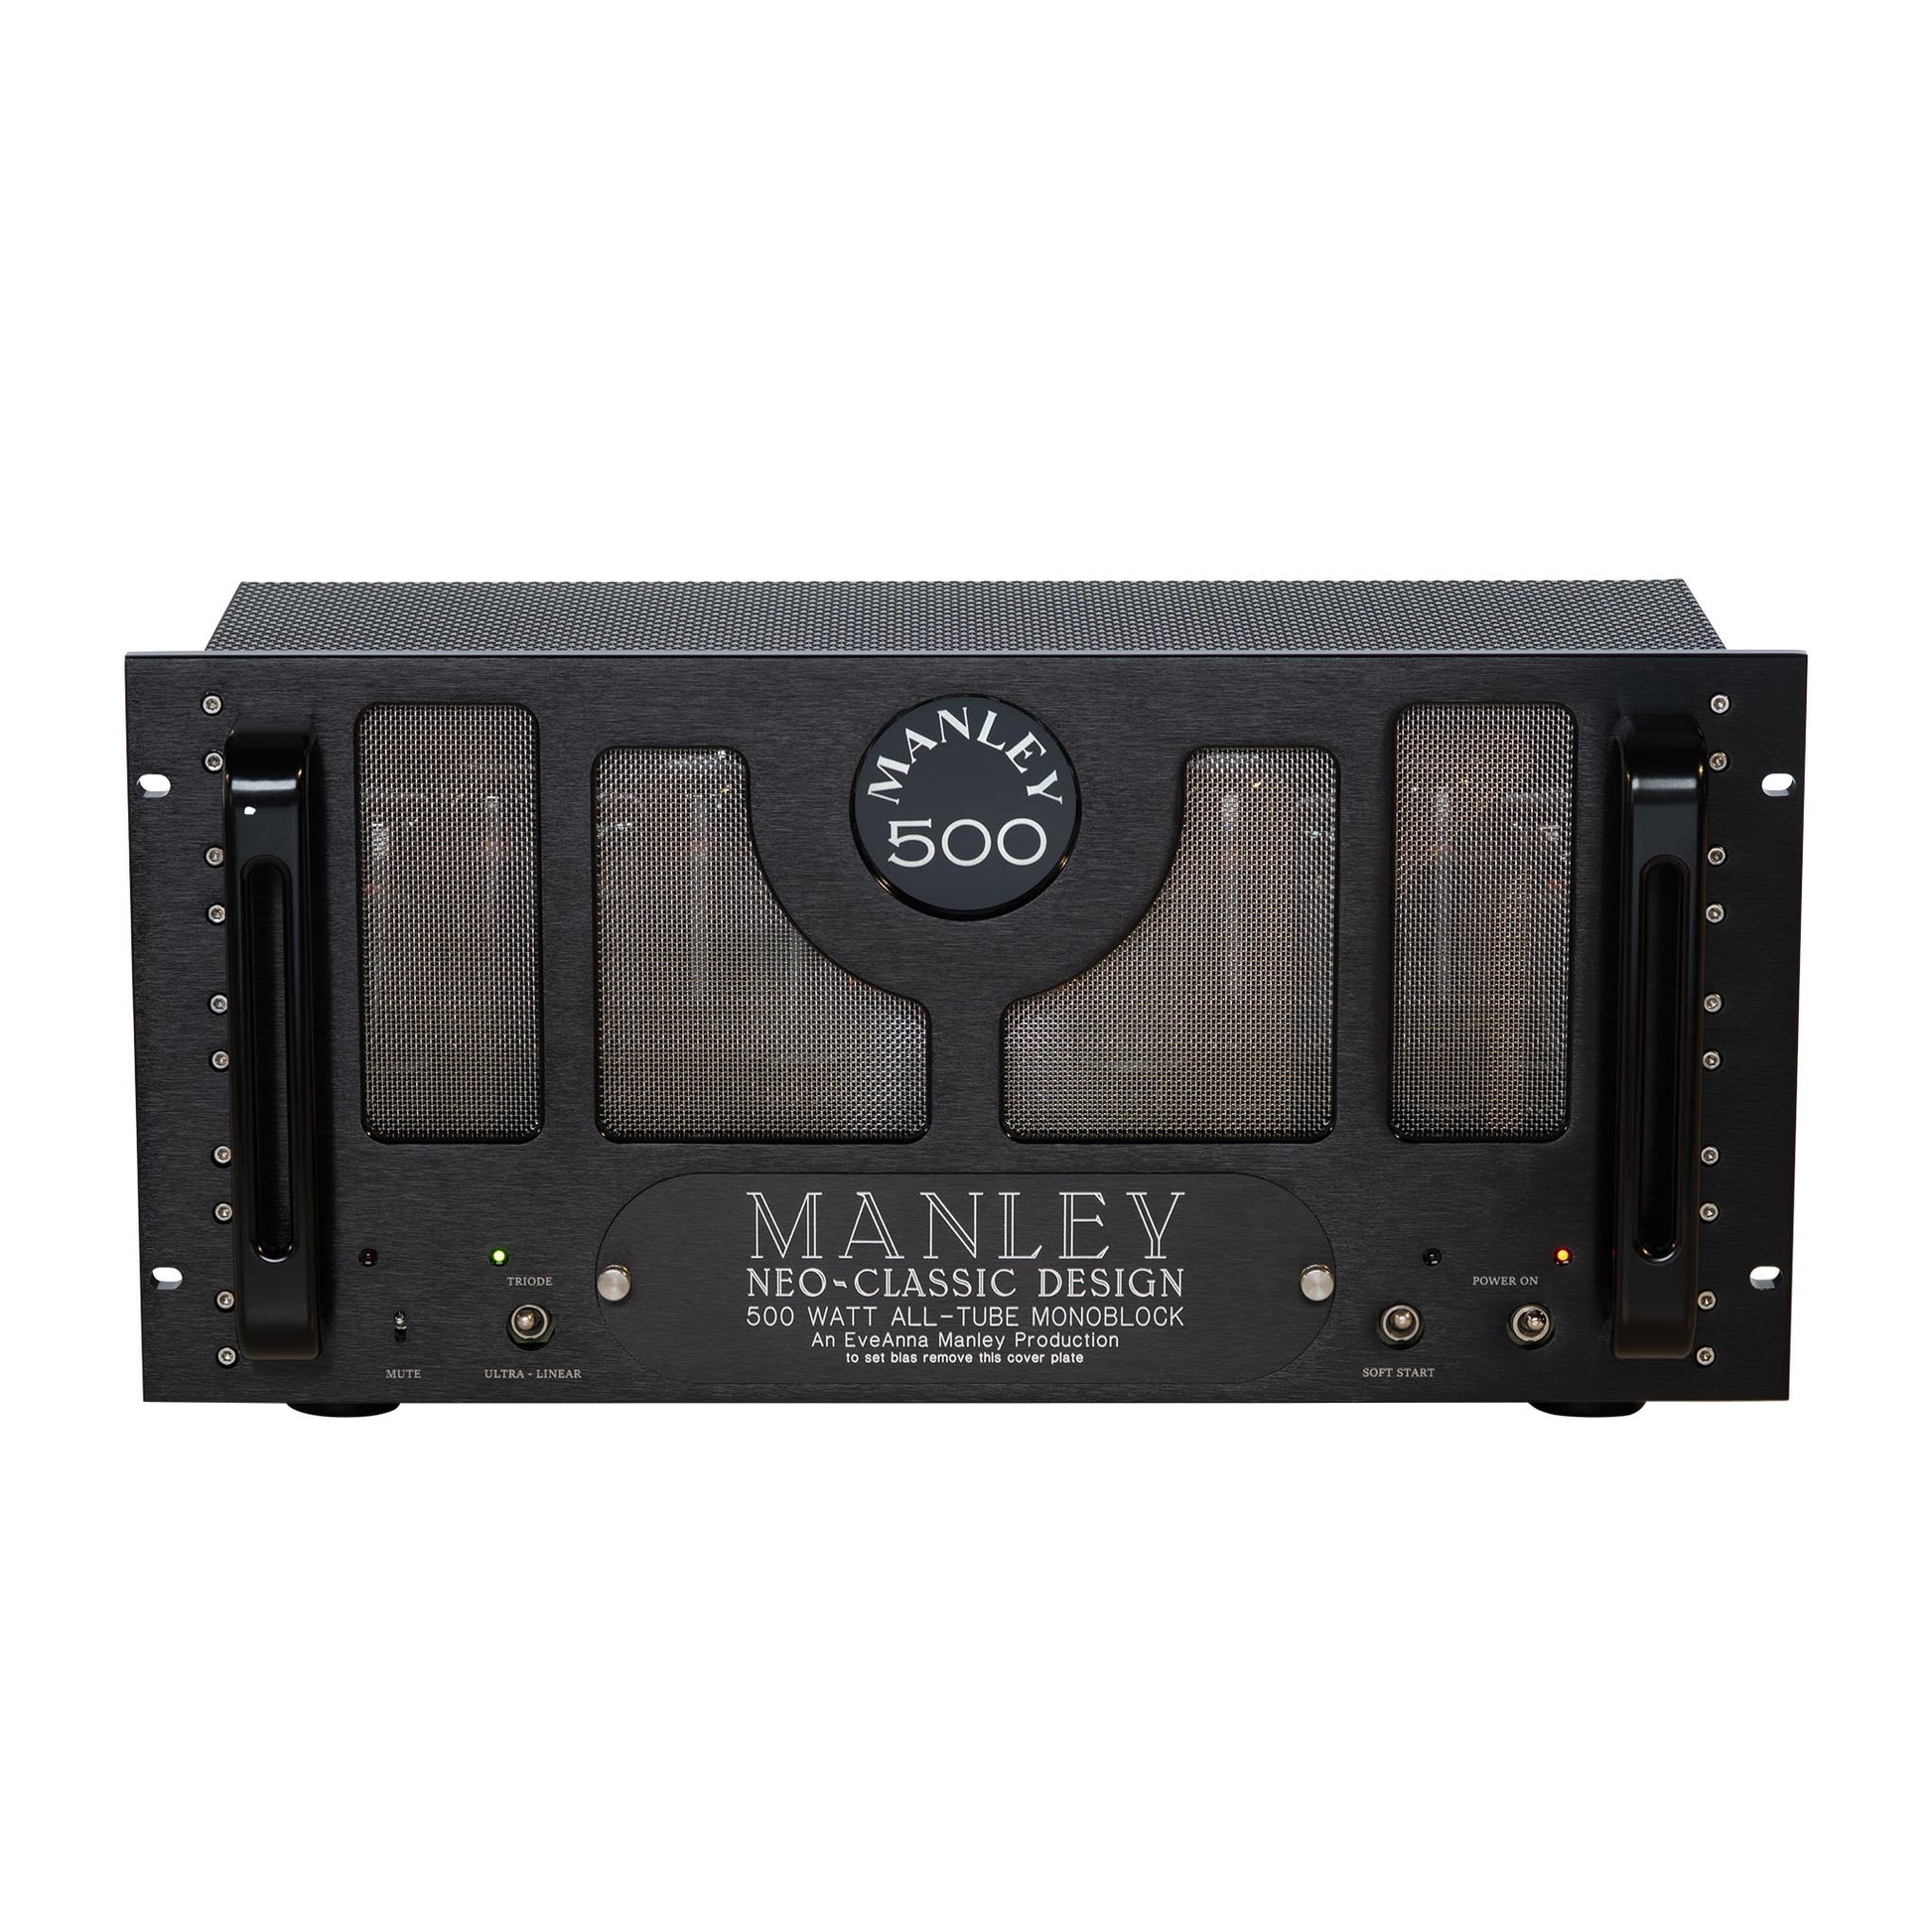 Manley Neo Classic 500 Monoblocks